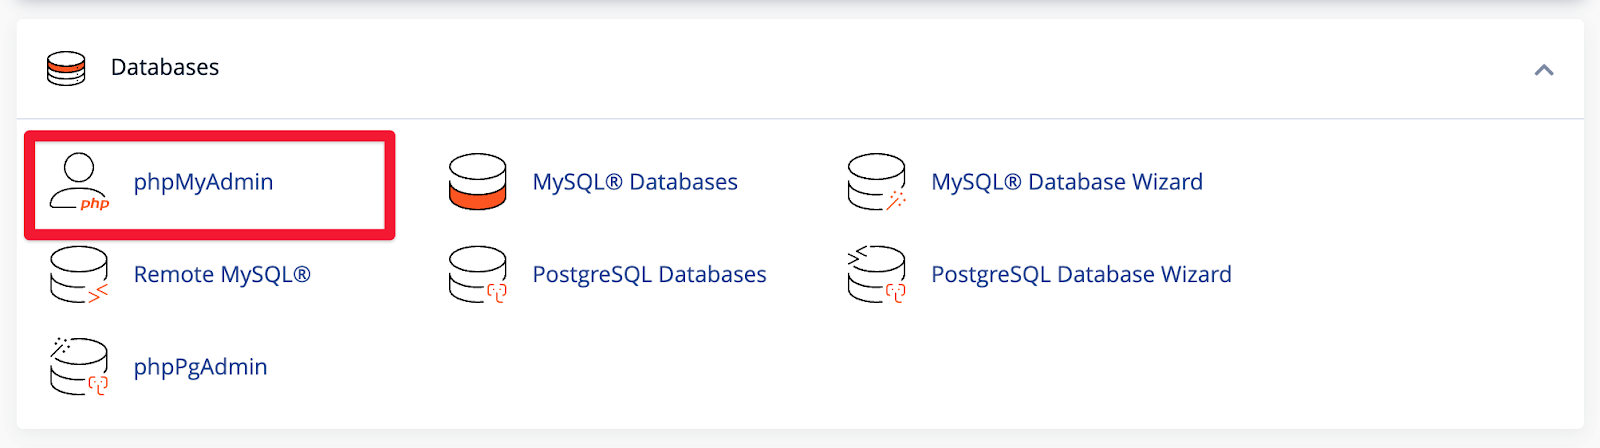 Импорт данных в базу данных MySQL через cPanel | HostPro Wiki